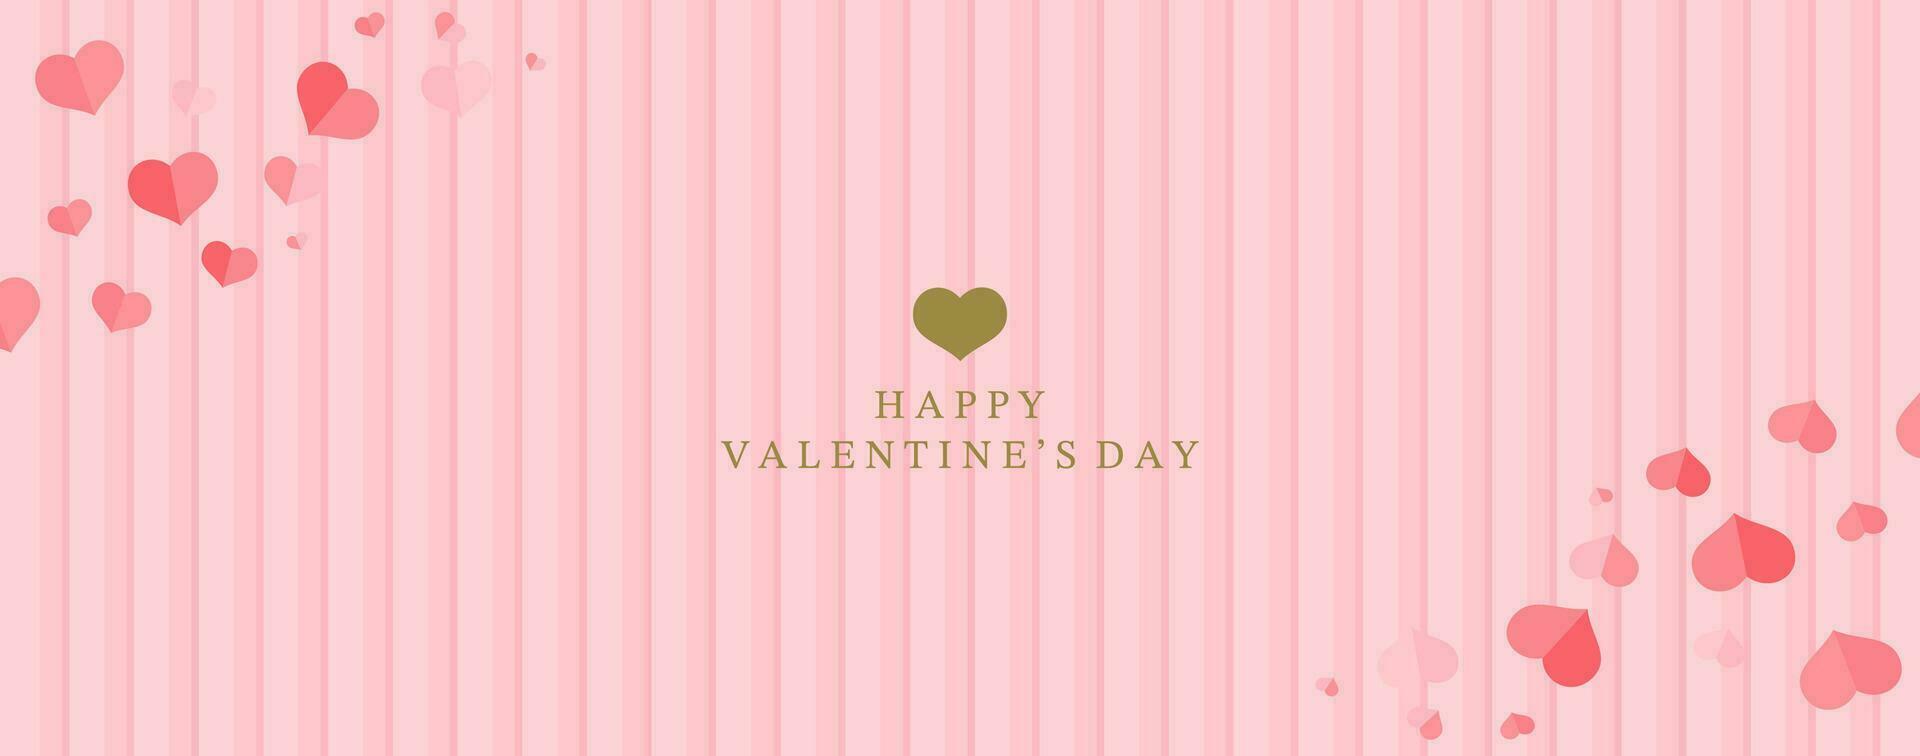 heart background for valentine's day.Editable vector illustration for postcard,banner